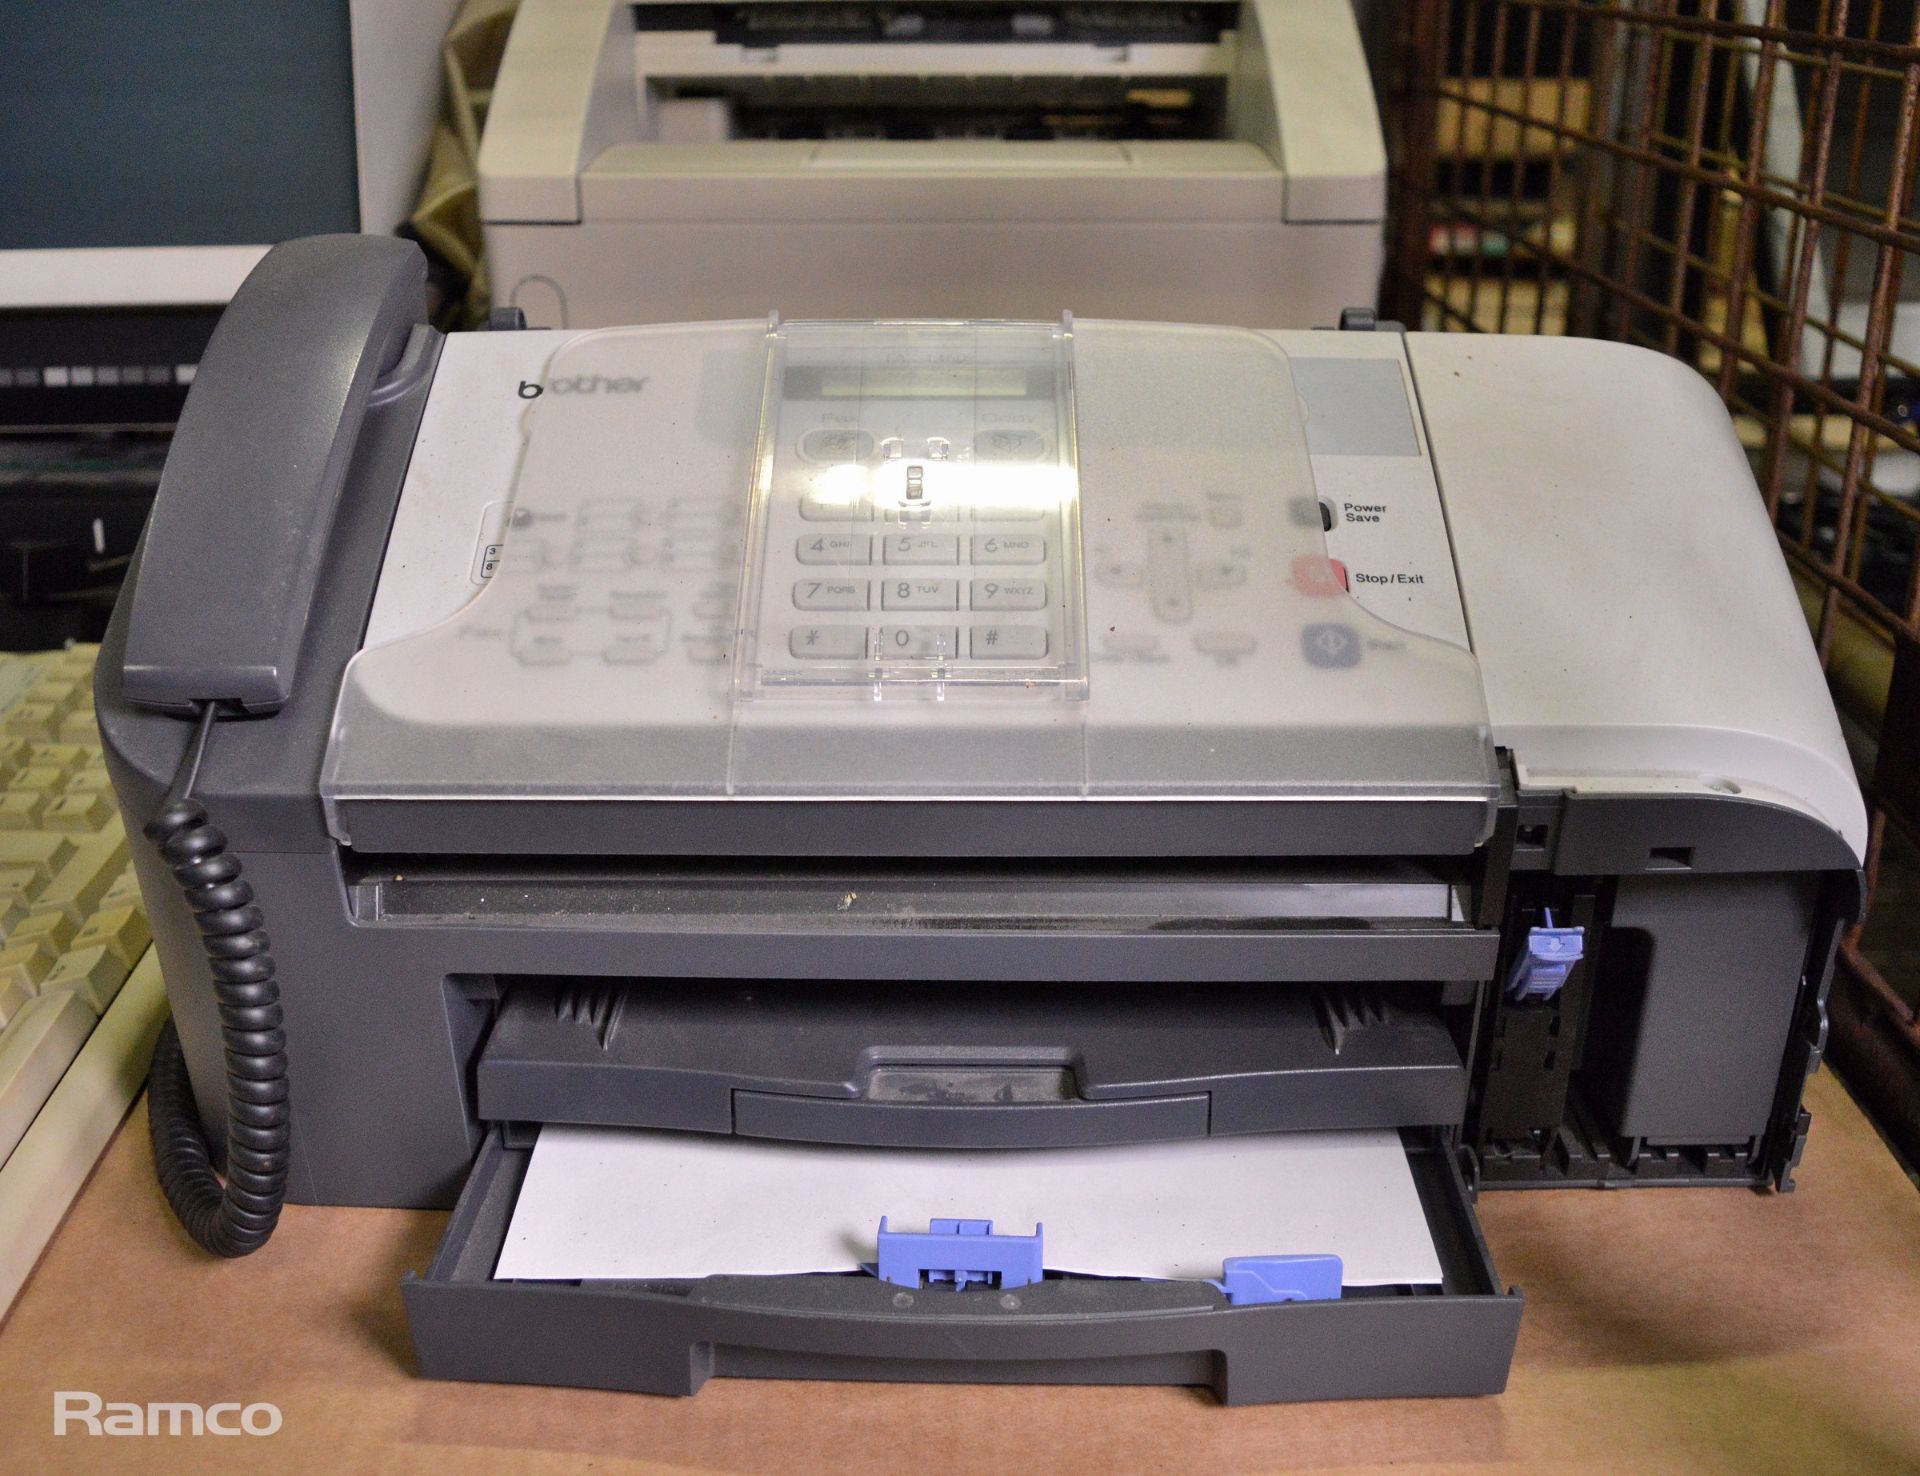 Bell & Howell microfiche reader, 2x Fax machines, desk phones, Avaya IP500 V2 network hub - Image 7 of 7